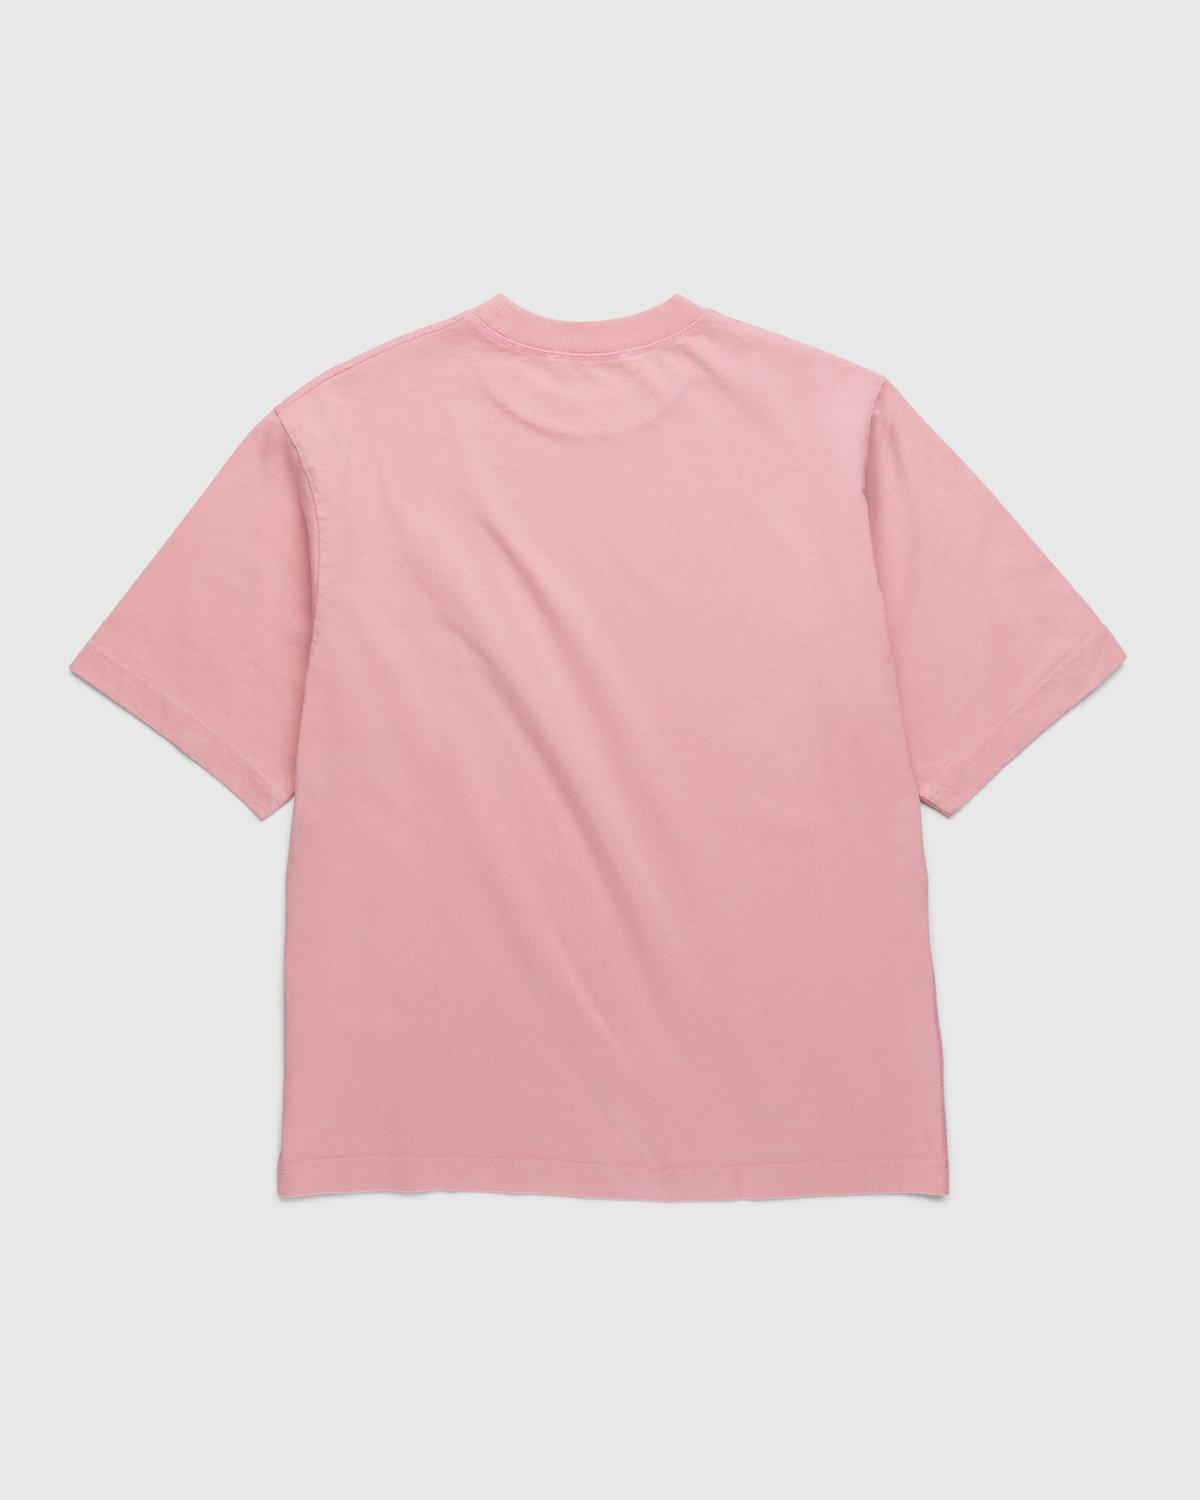 Acne Studios - Logo T-Shirt Pink - Clothing - Pink - Image 2